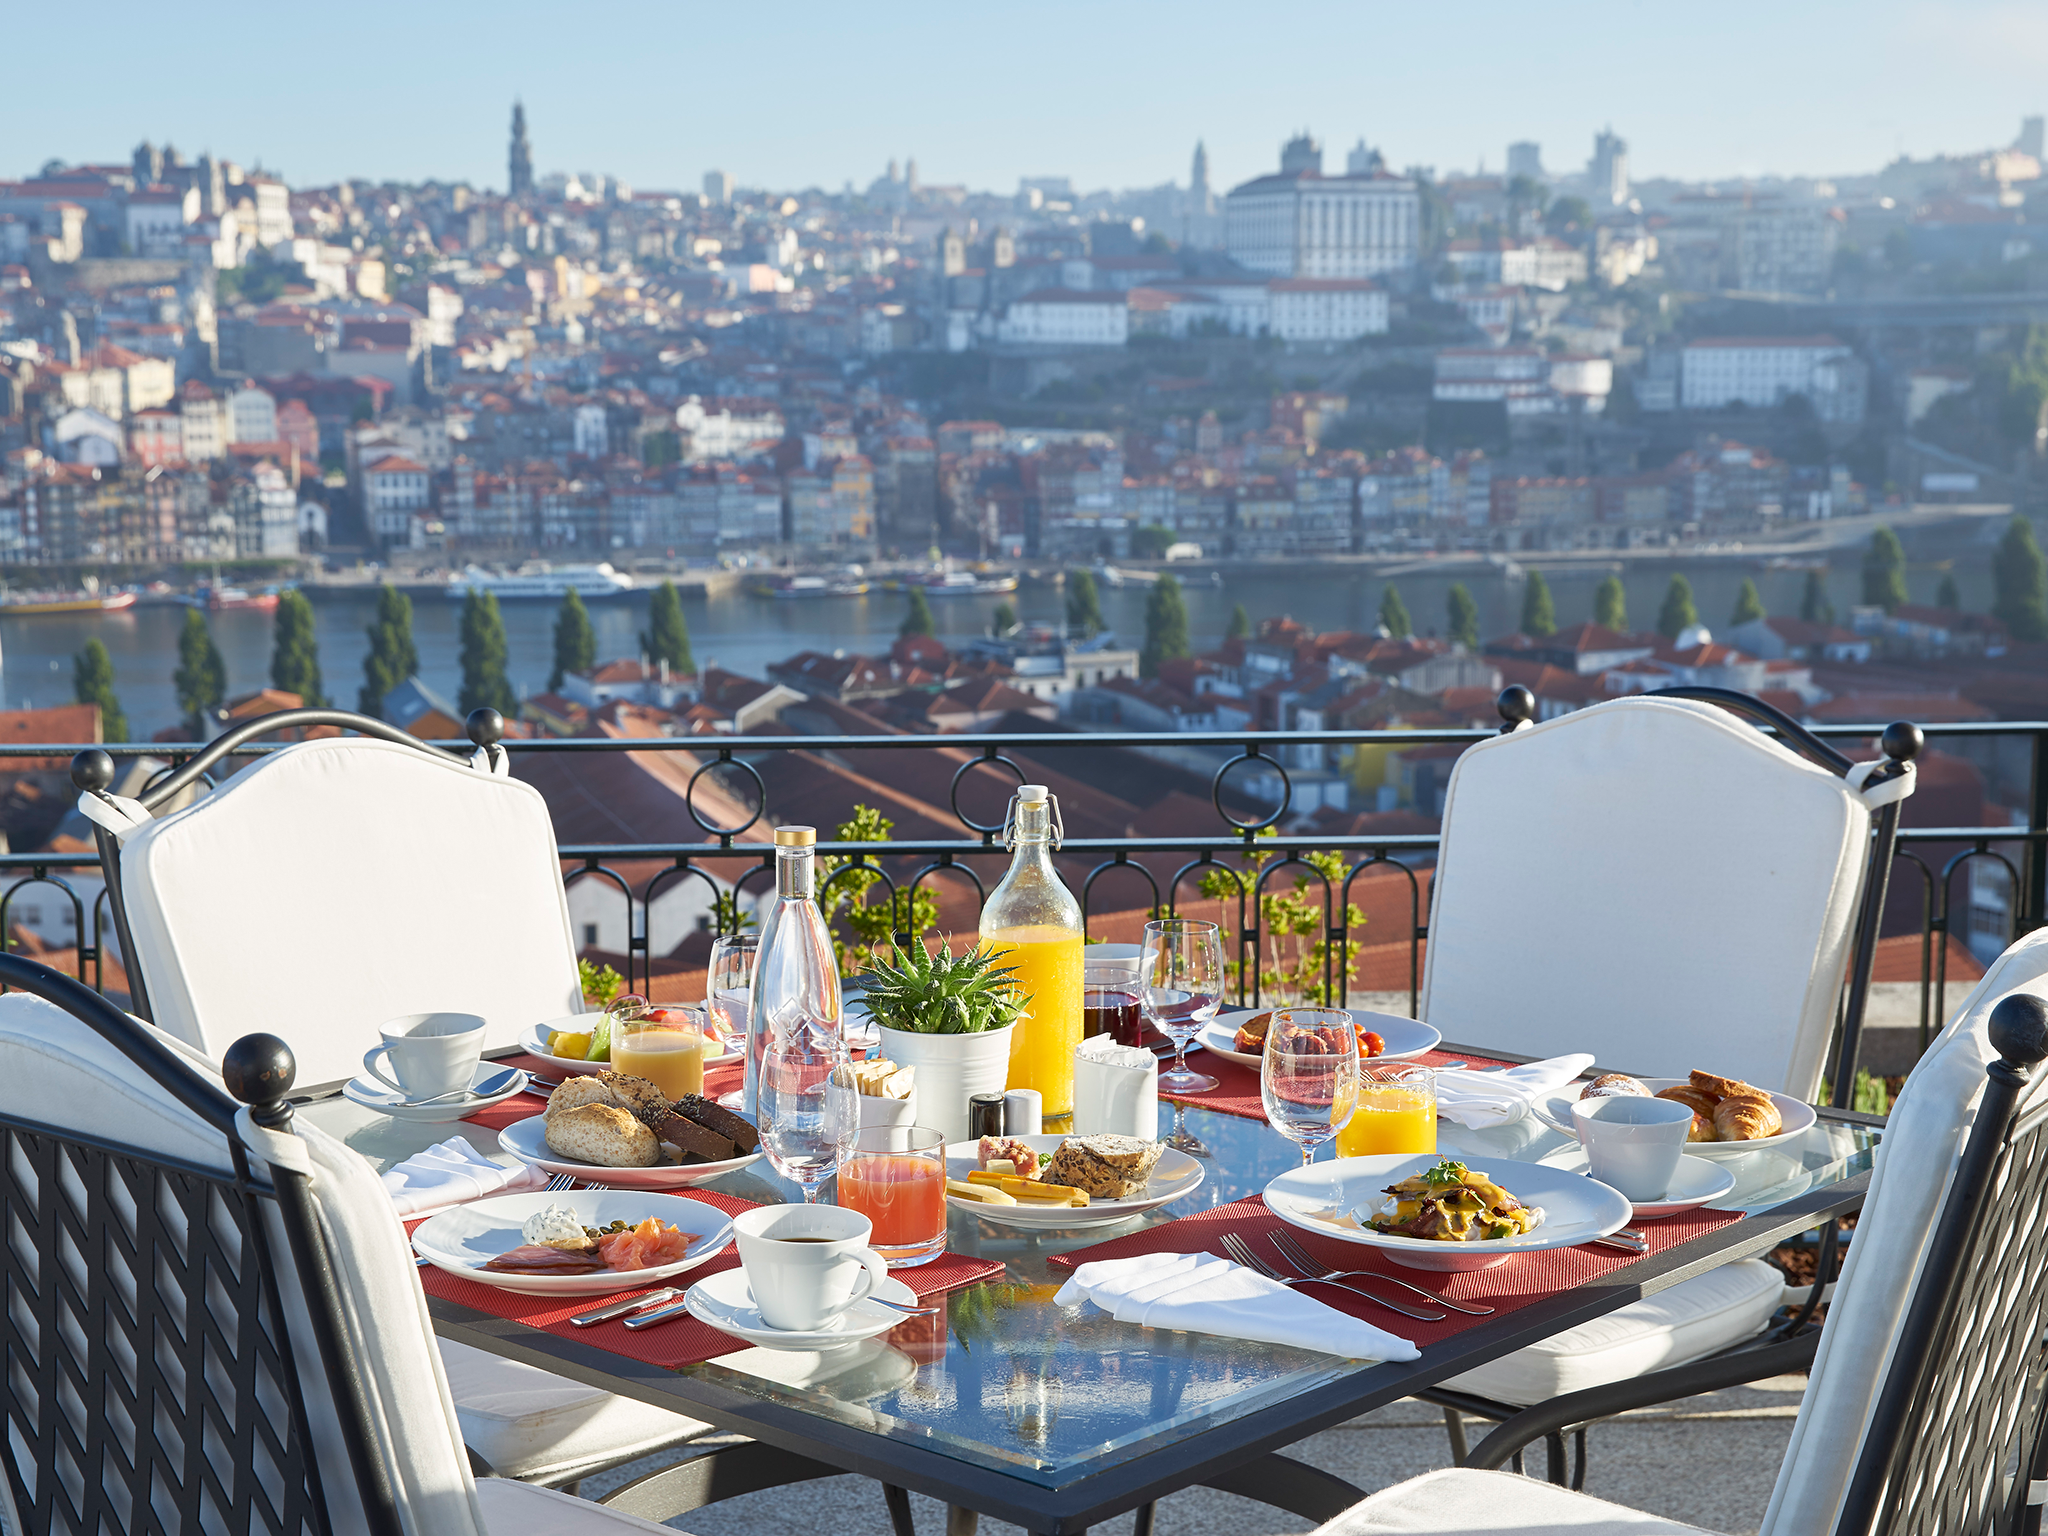 The gourmet destination hotel hosts a stunning breakfast view